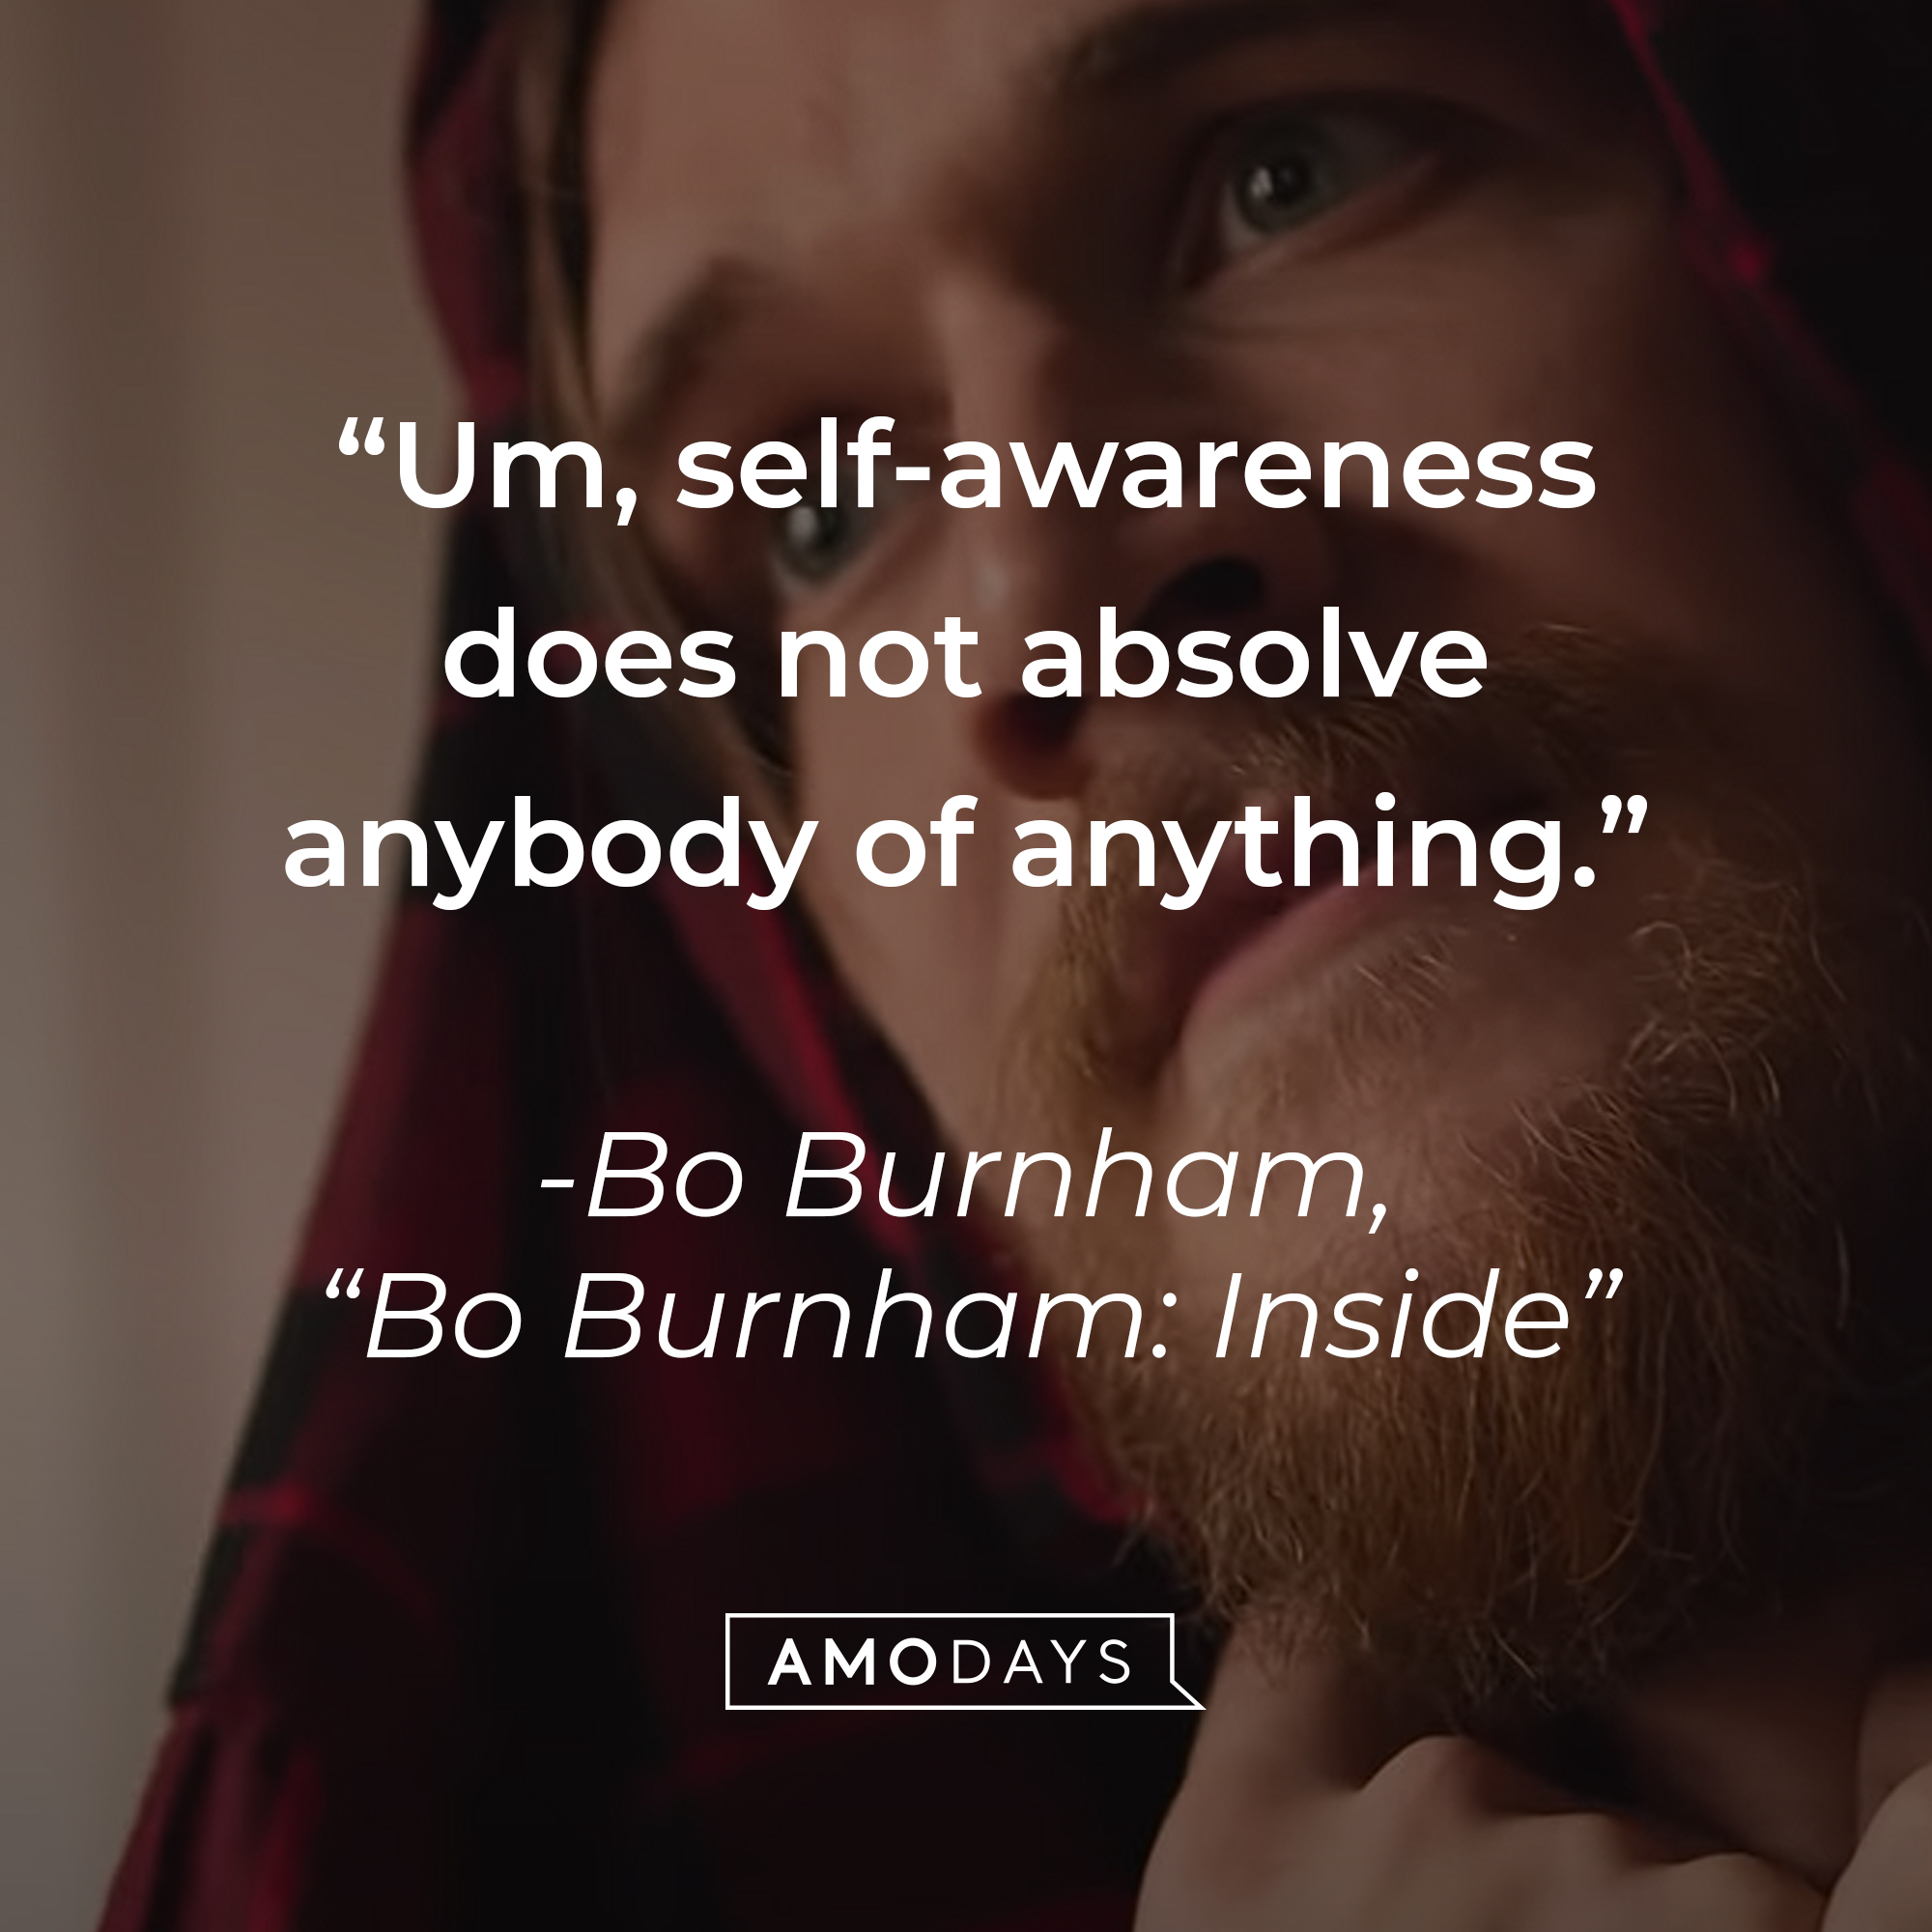 A quote from Bo Burnham in "Bo Burnham: Inside" comedy special: "Um, self-awareness does not absolve anybody of anything." | Source: youtube.com/boburnham